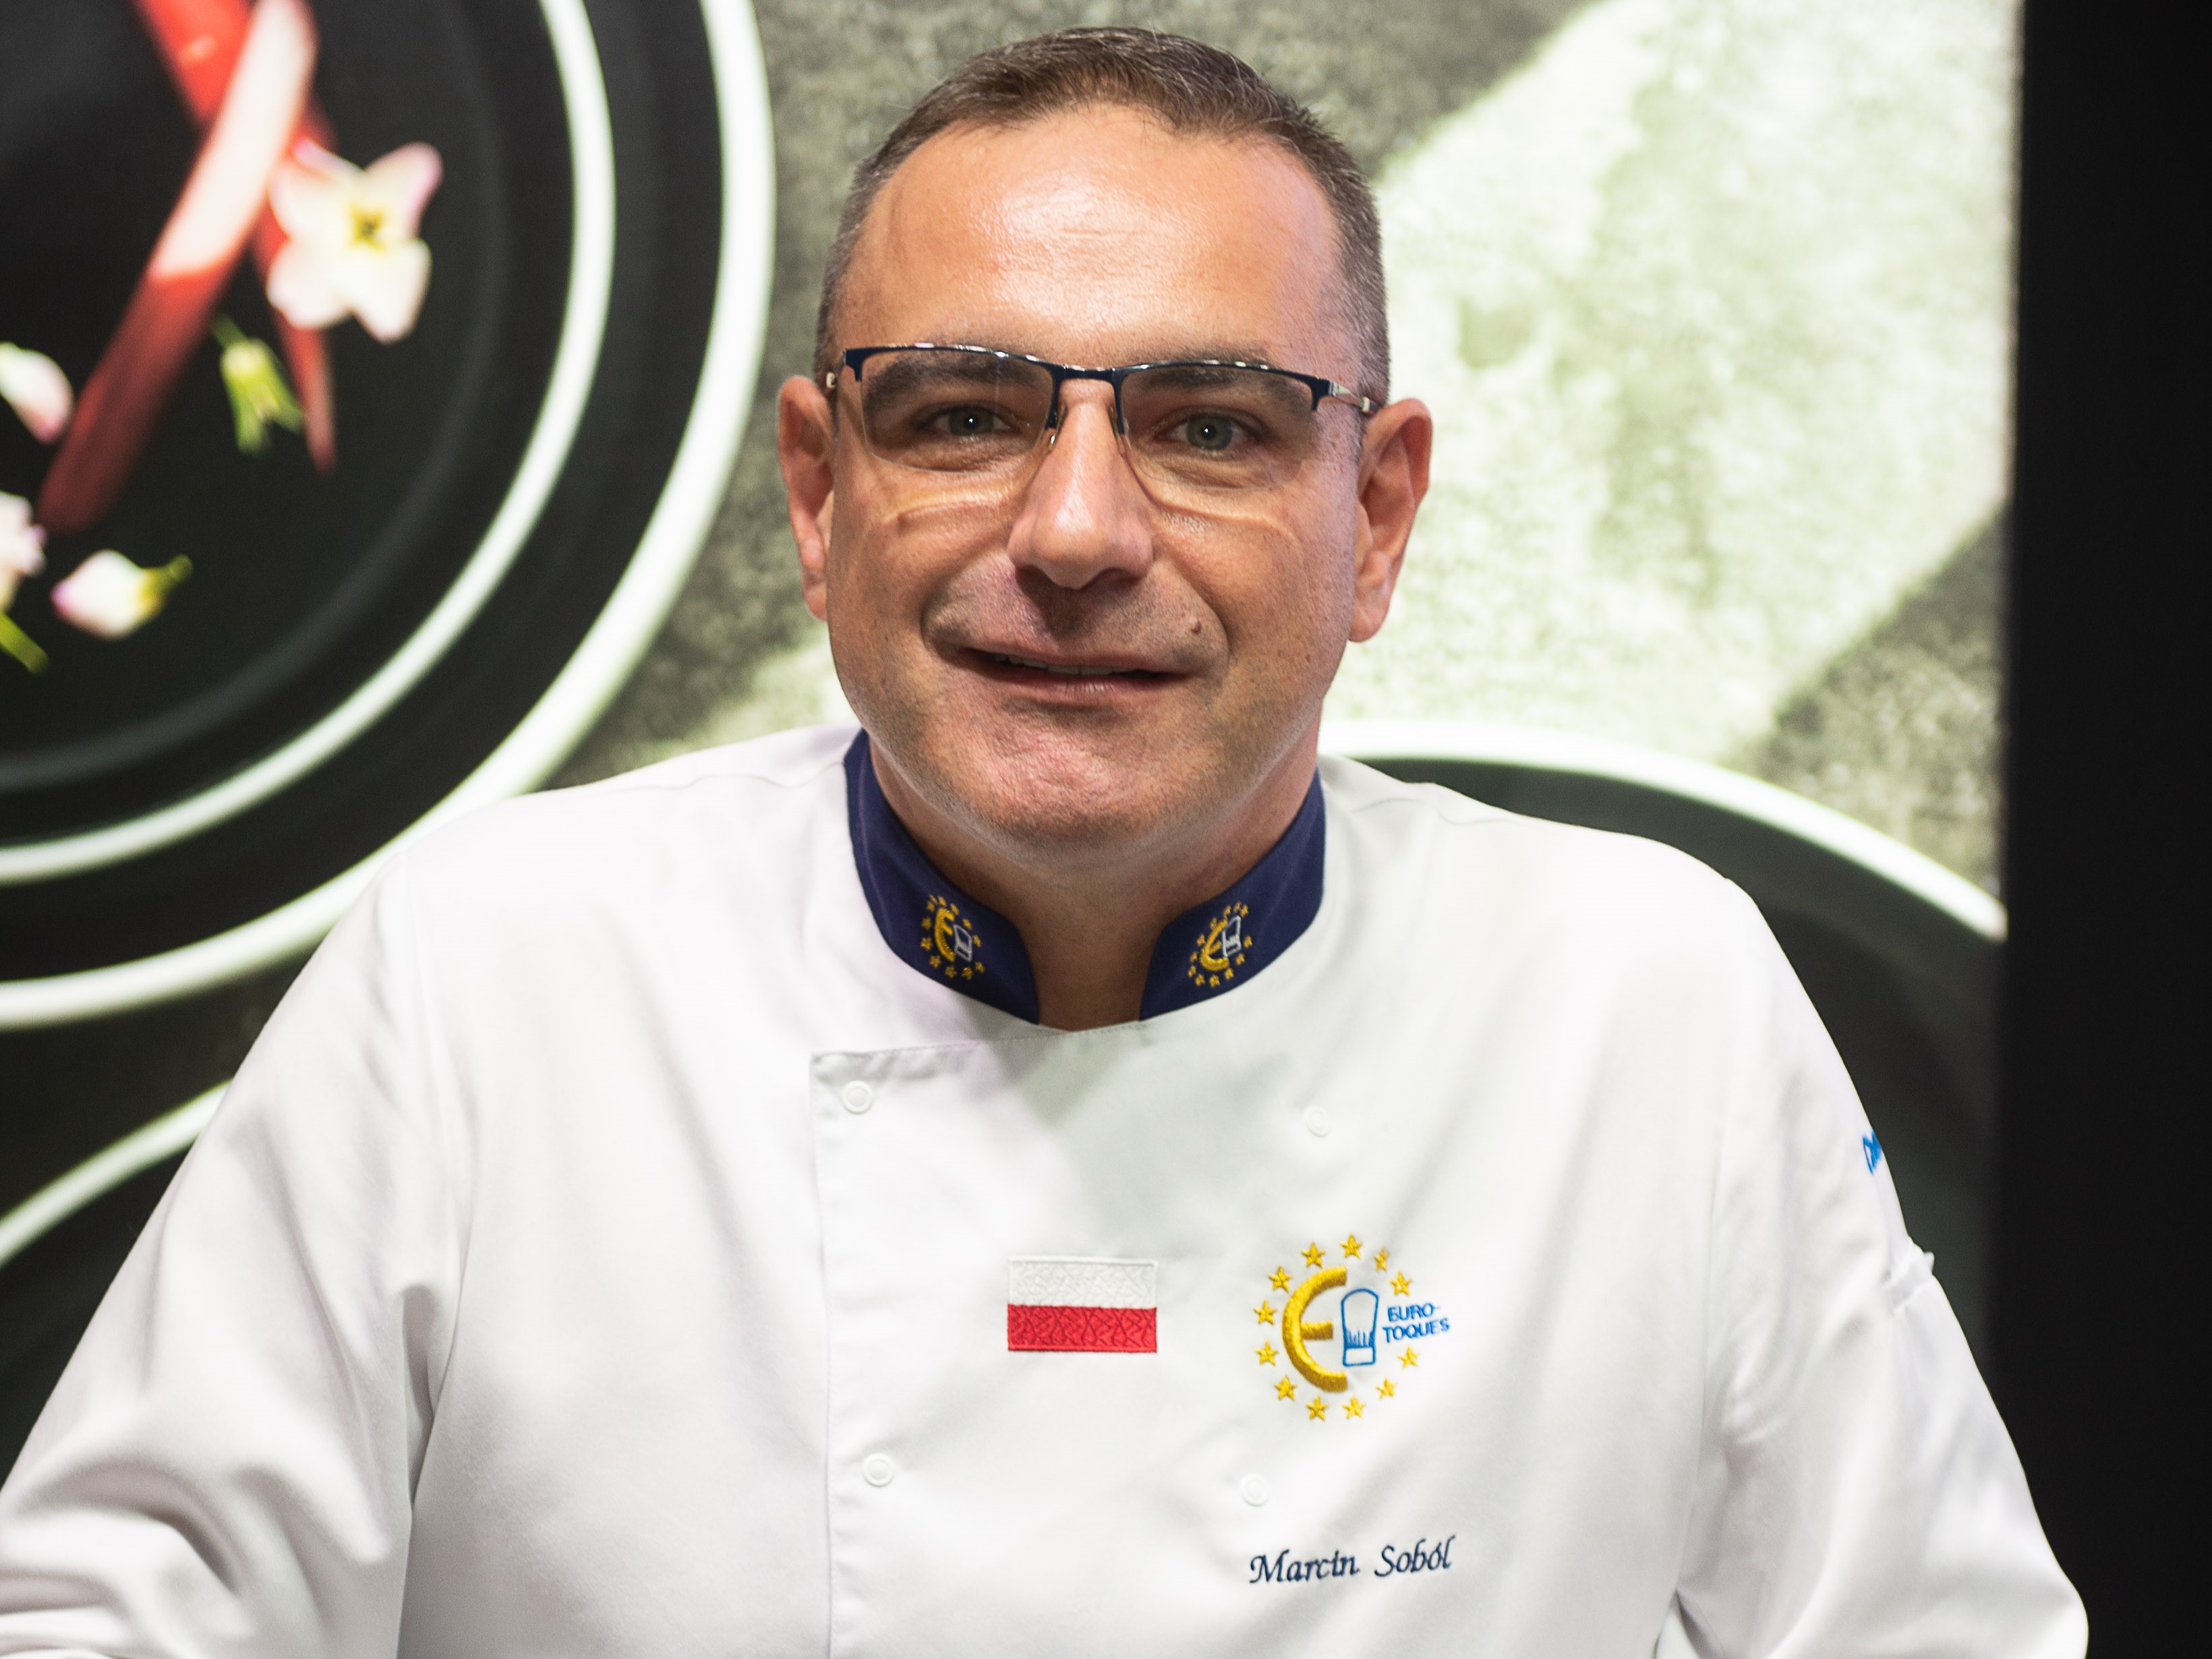 Marcin Soból: Live cooking w gastronomii